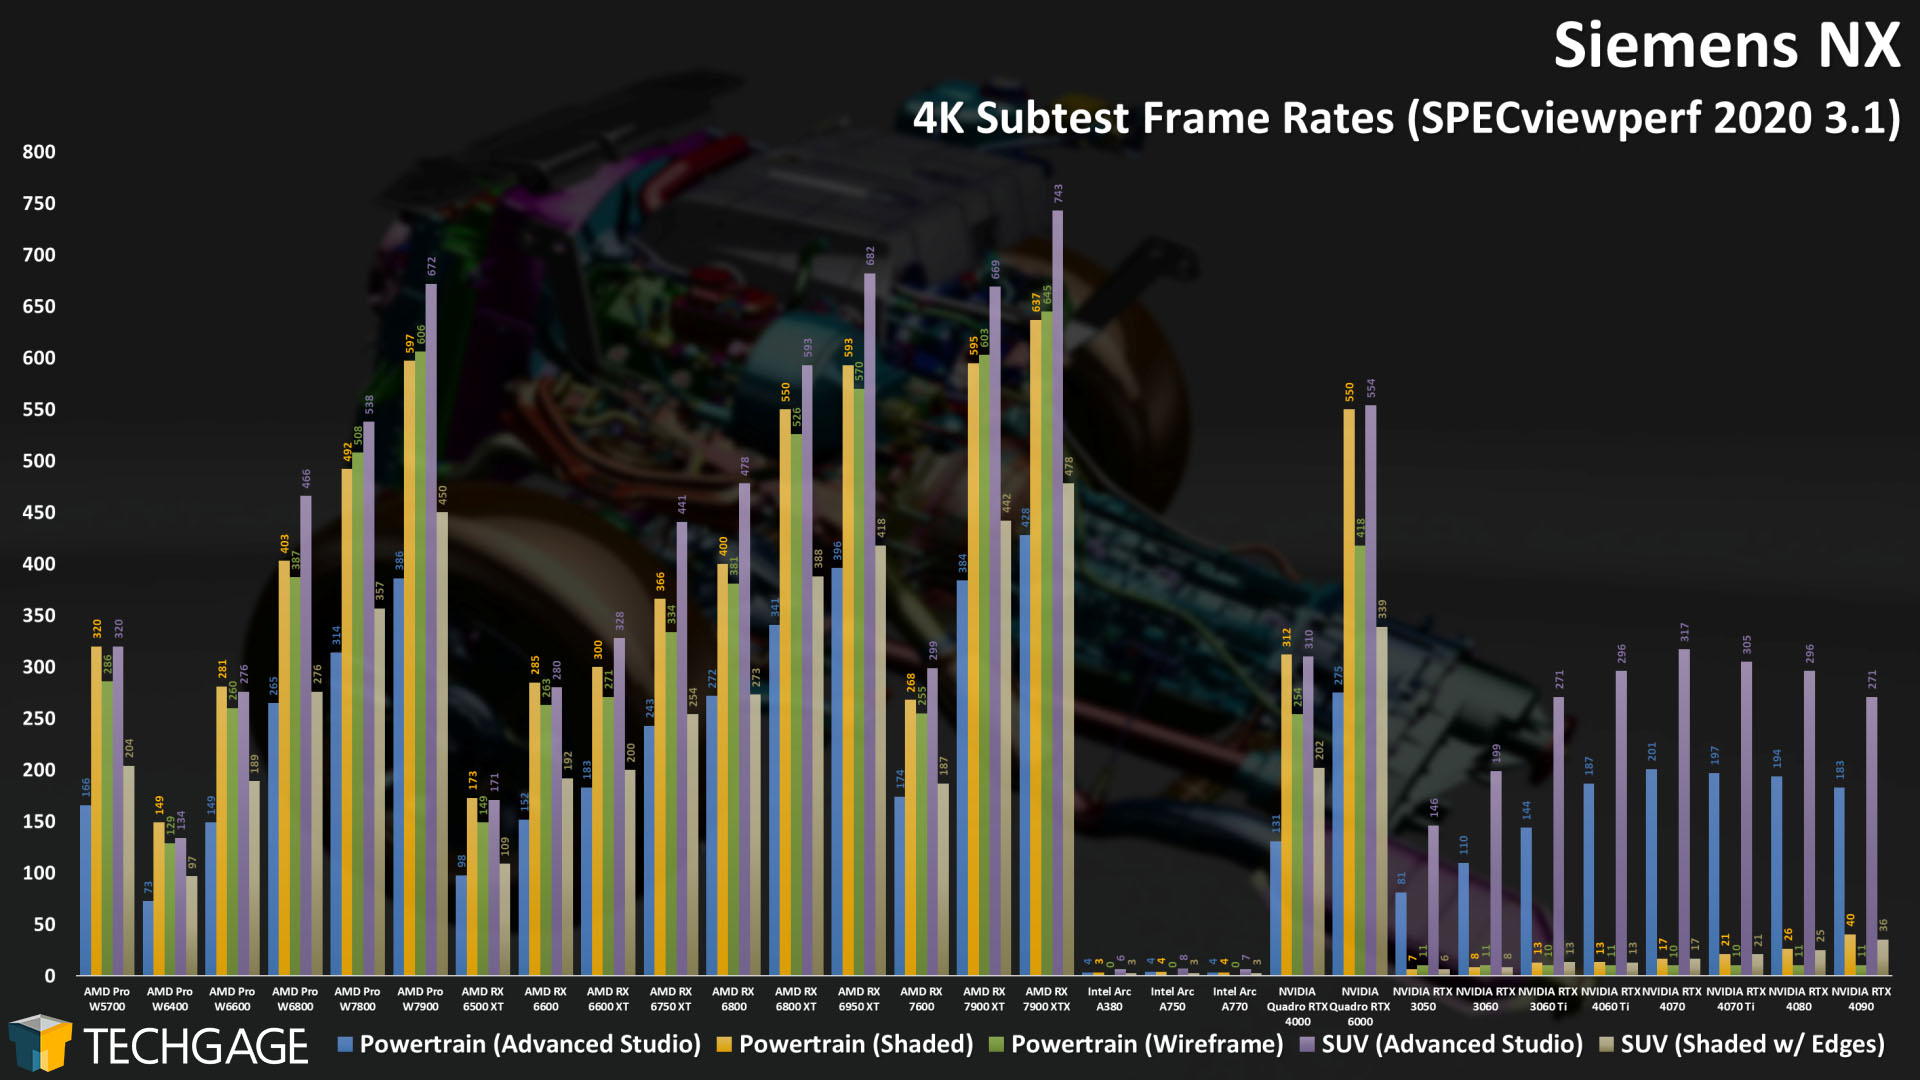 Siemens NX - 2160p Viewport Performance (Subtests)